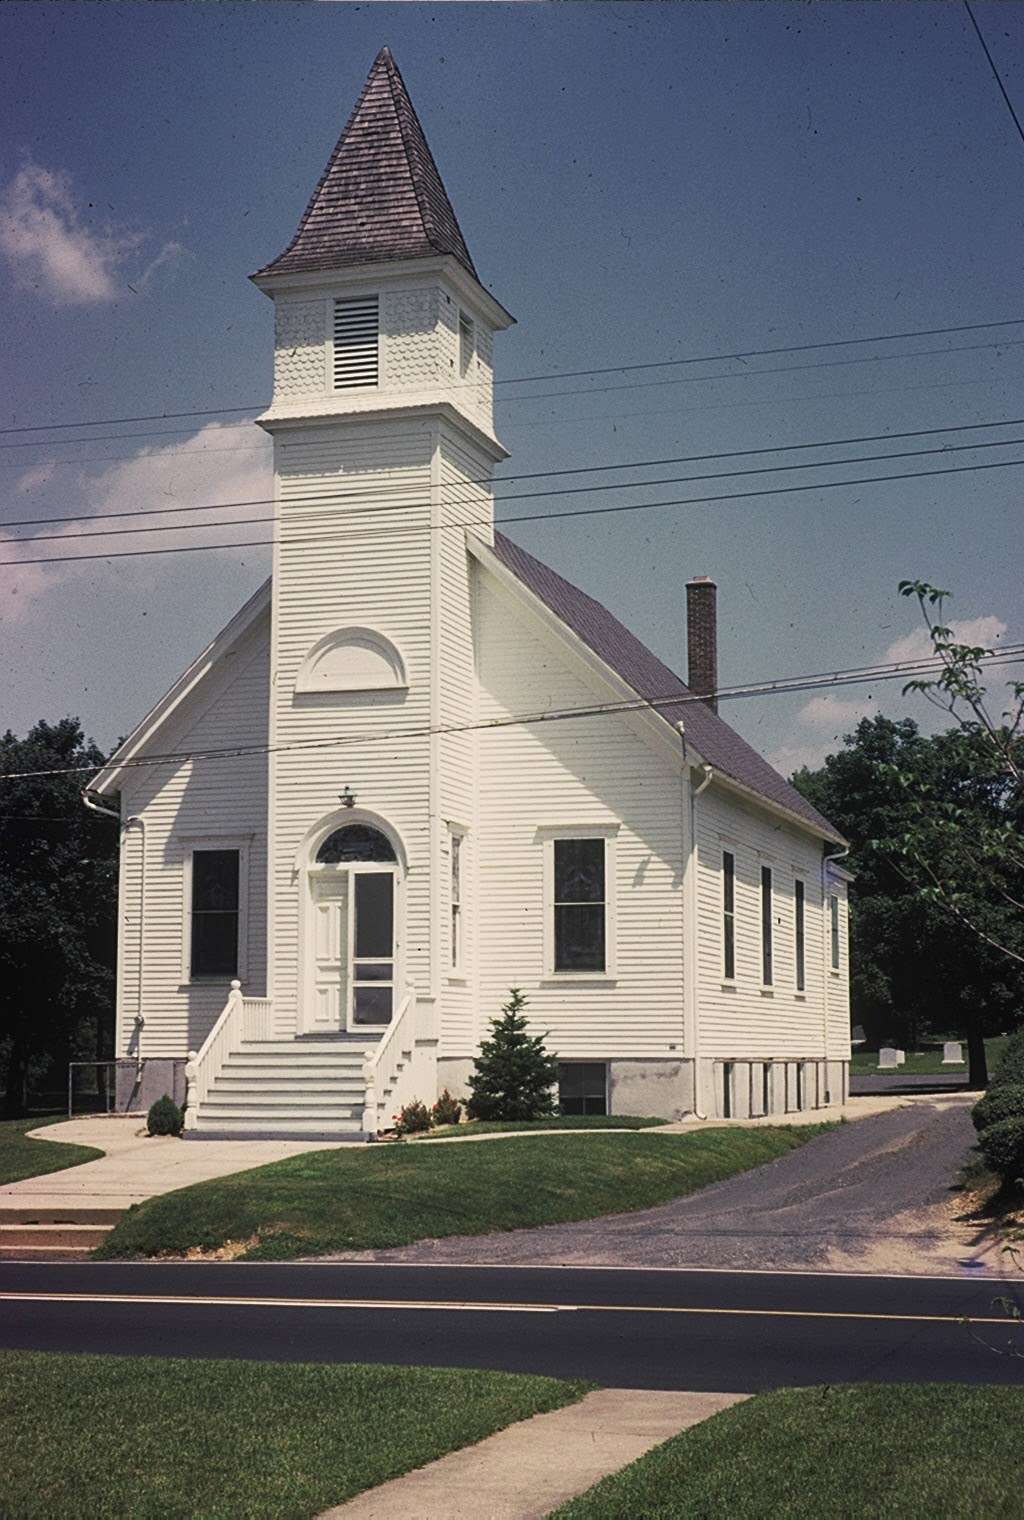 The Allenwood Church | 3110 Atlantic Ave, Allenwood, NJ 08720, USA | Phone: (732) 223-2440